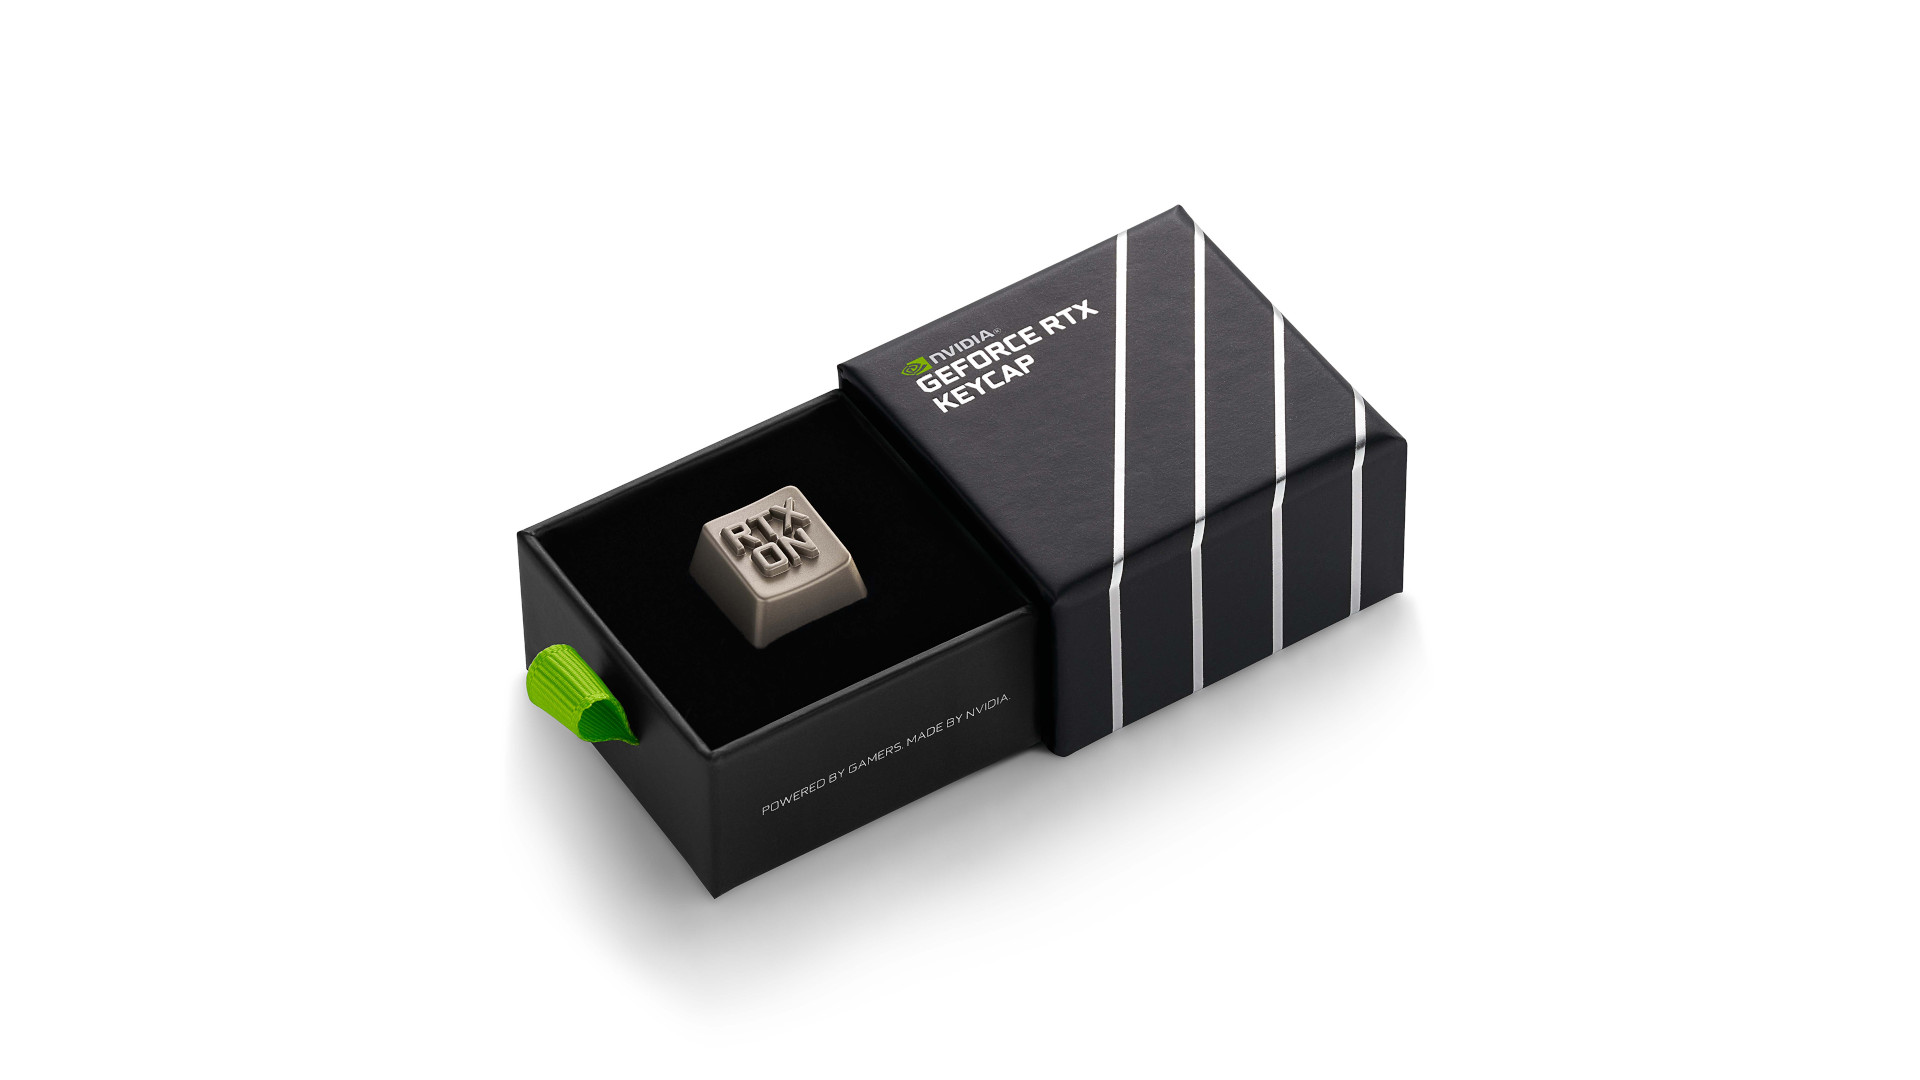 Nvidia GeForce RTX keycap in box